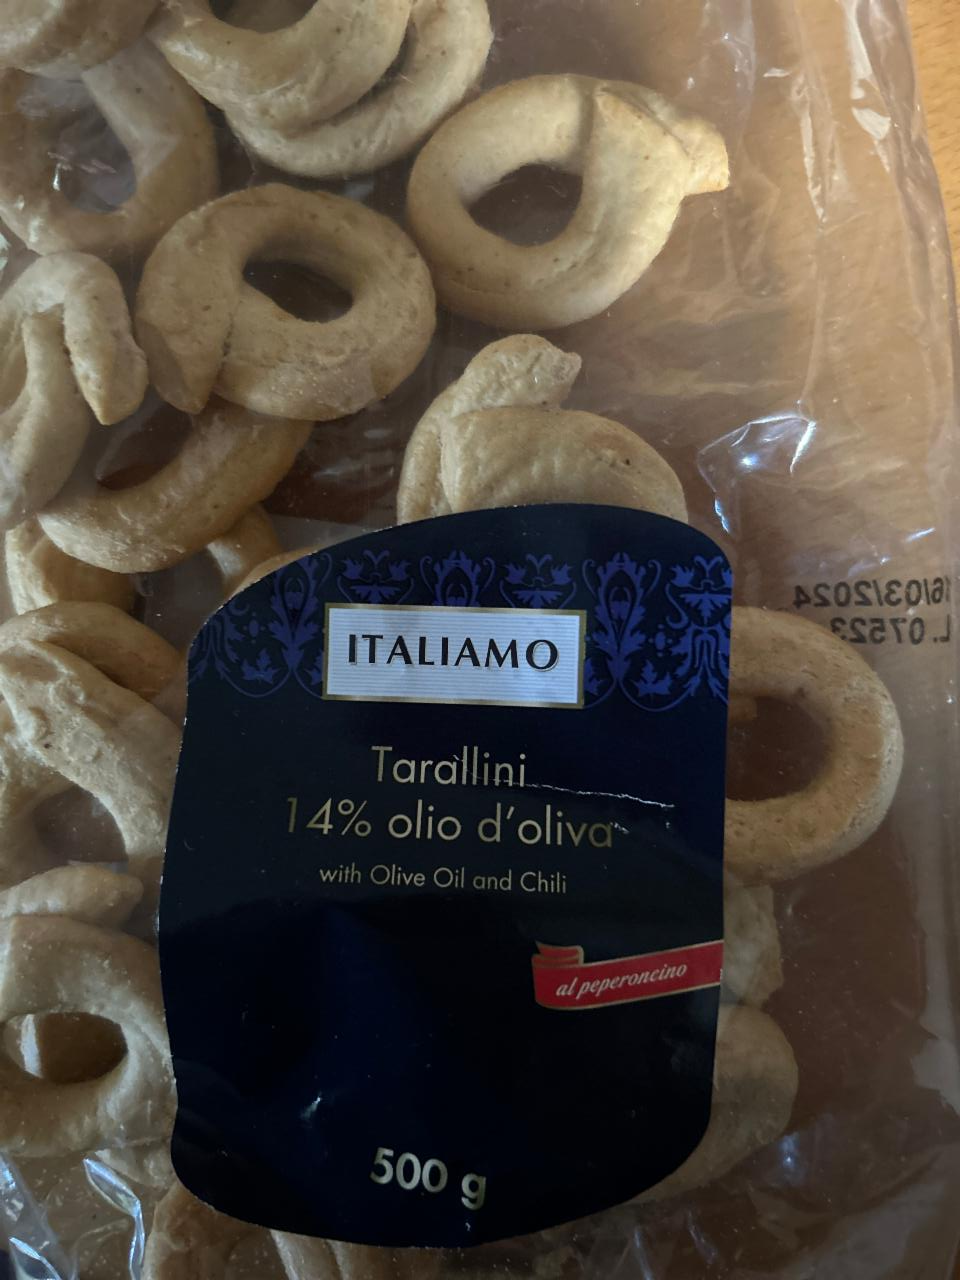 Fotografie - Tarallini 14% olio d'oliva with Olive Oil and Chili Italiamo